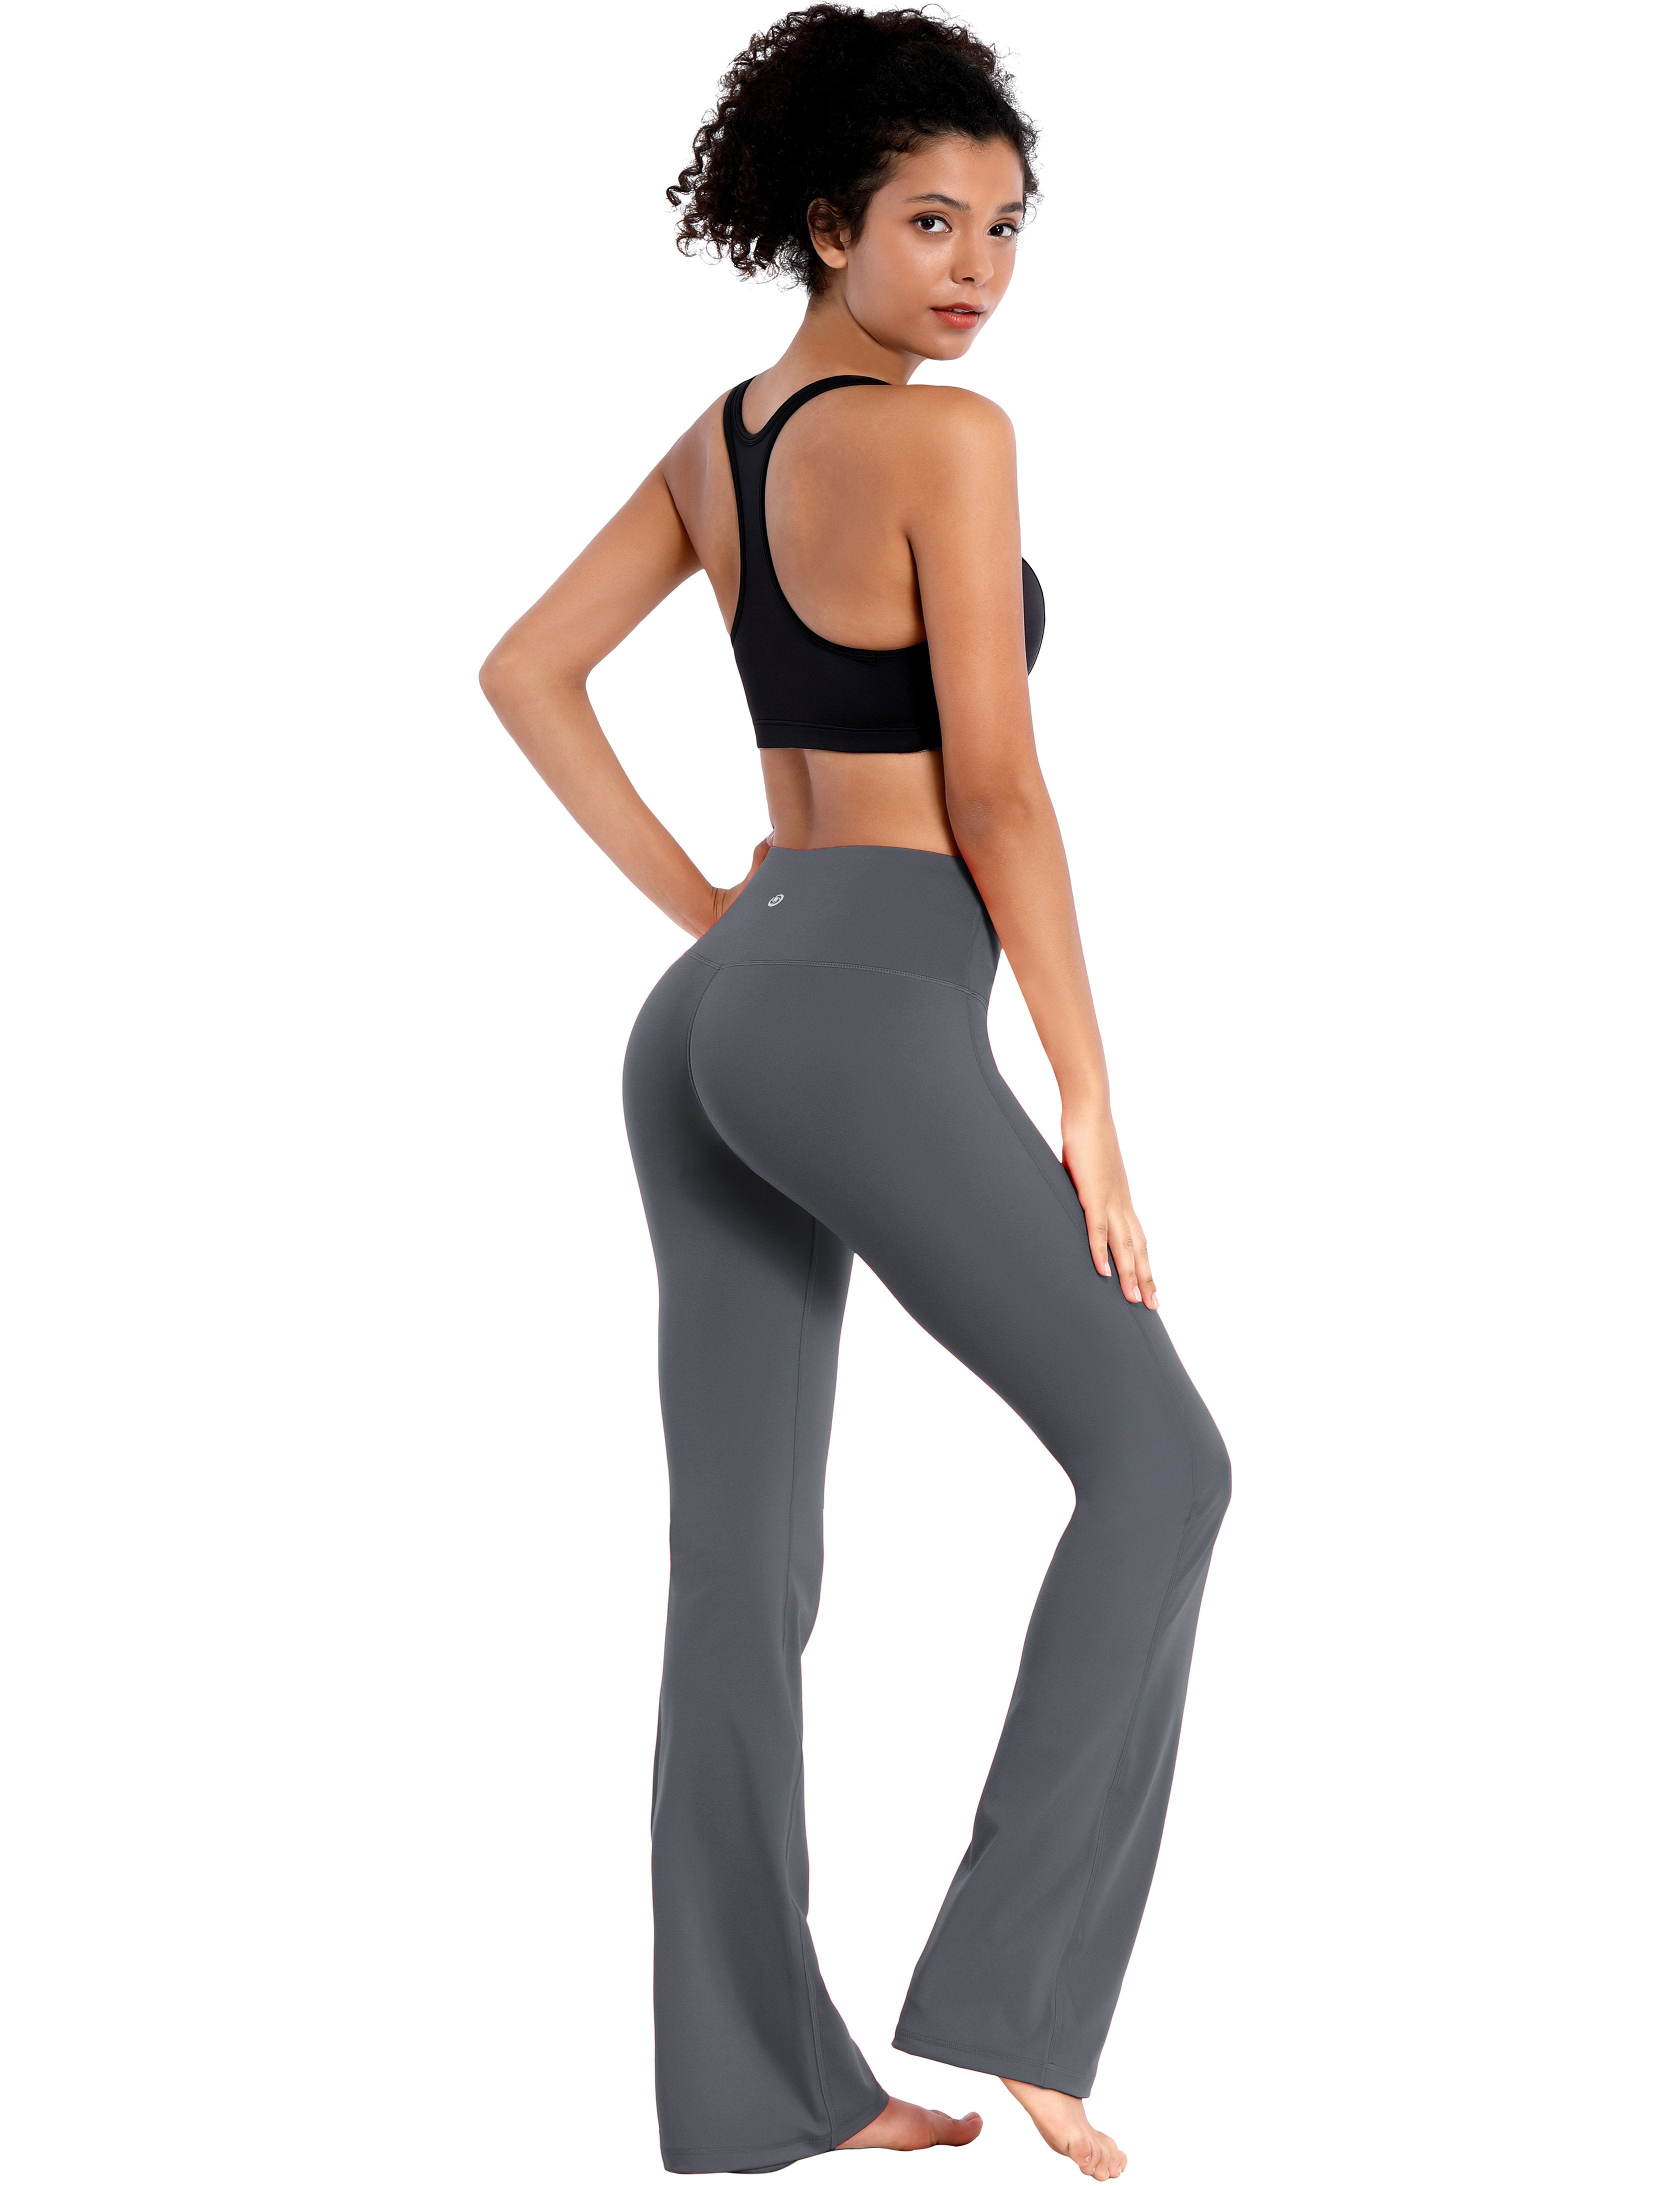 BUBBLELIME 2931333537 4 Styles Womens High Waist Bootcut Yoga Pants - Basic  Nylon_SHADOWcHARcOAL M-33 Inseam